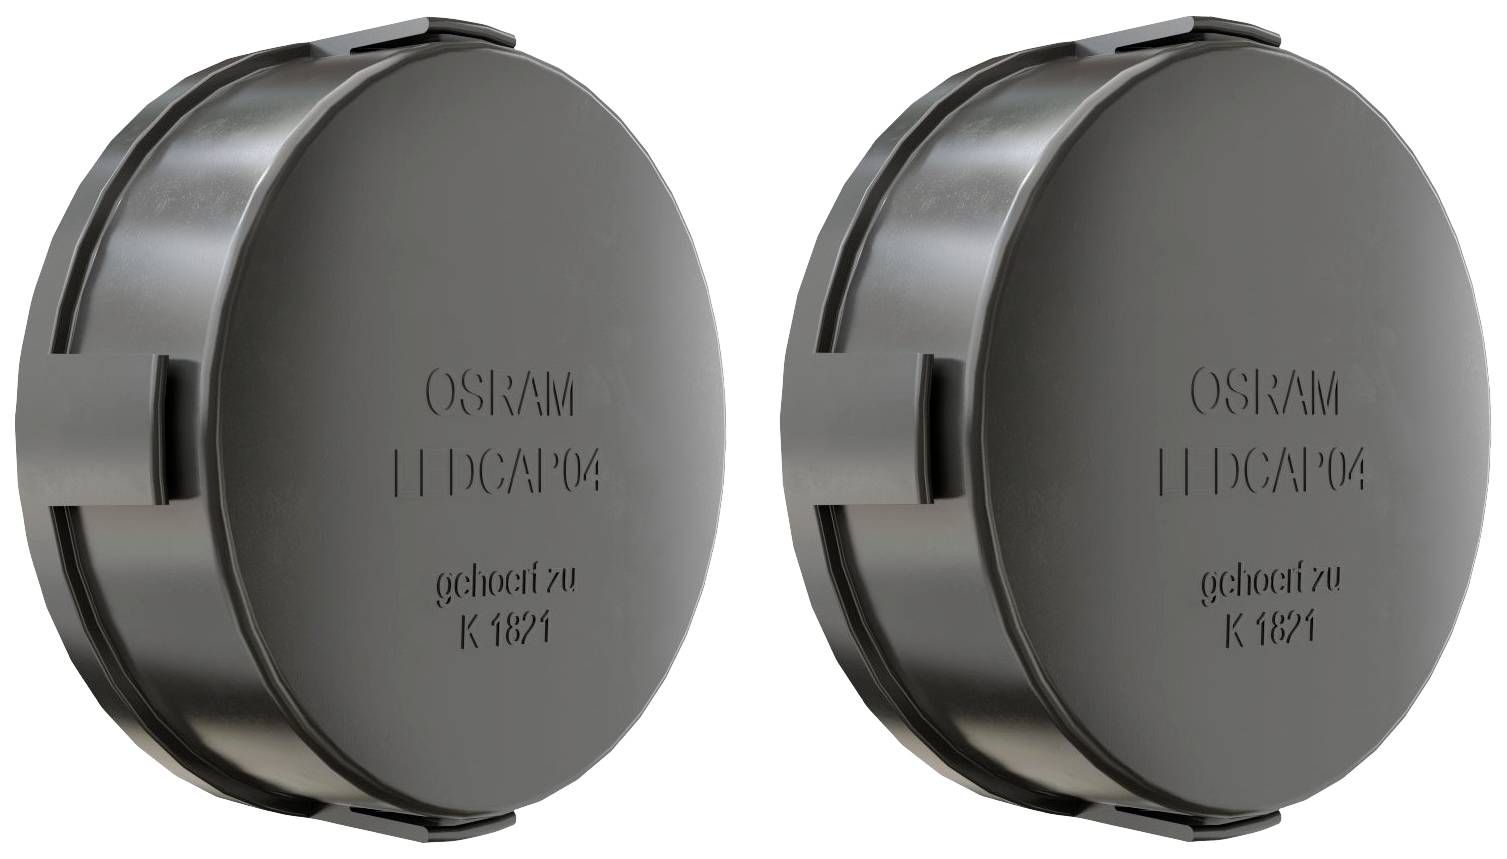 OSRAM Kfz Lampenfassung LEDCAP04 Bauart (Kfz-Leuchtmittel) Adapter